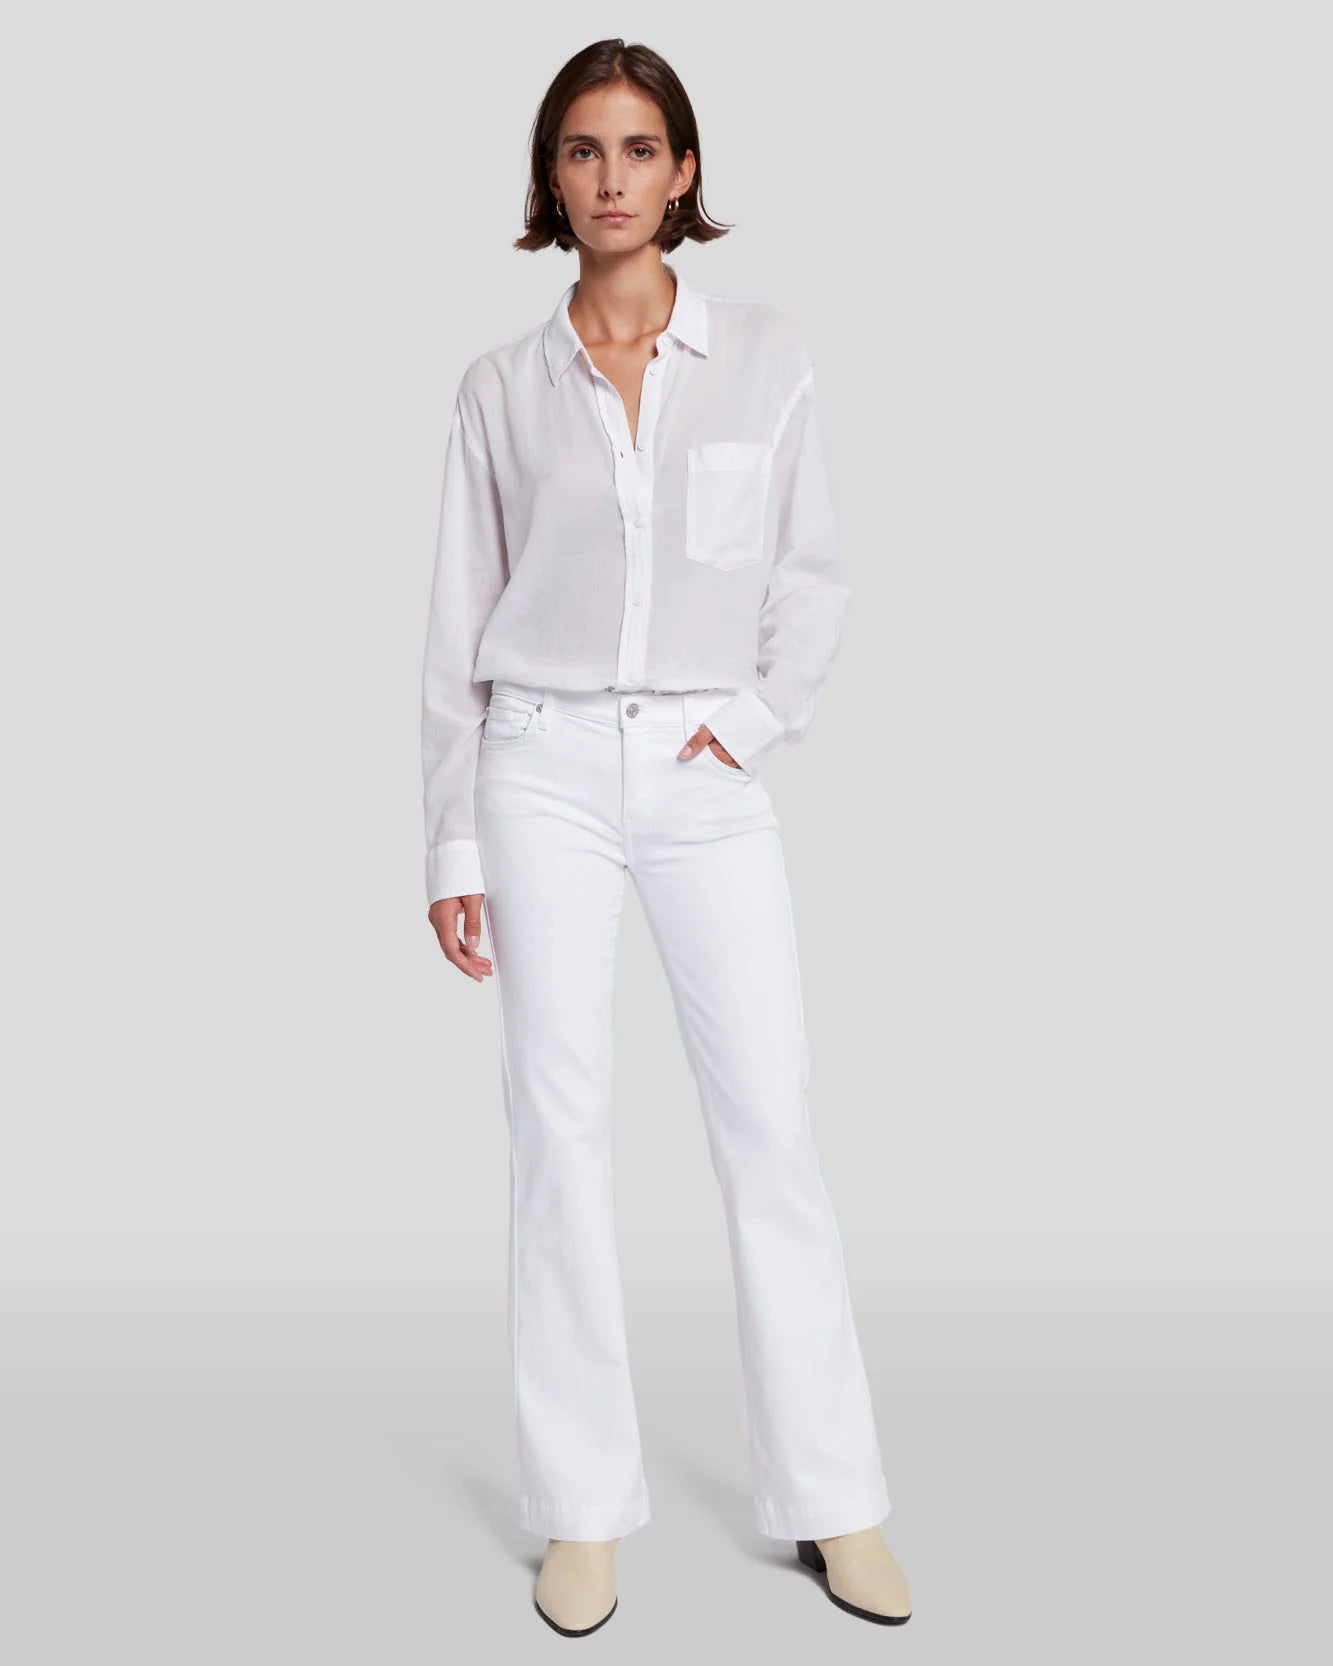 Dojo Tailorless - Luxe White